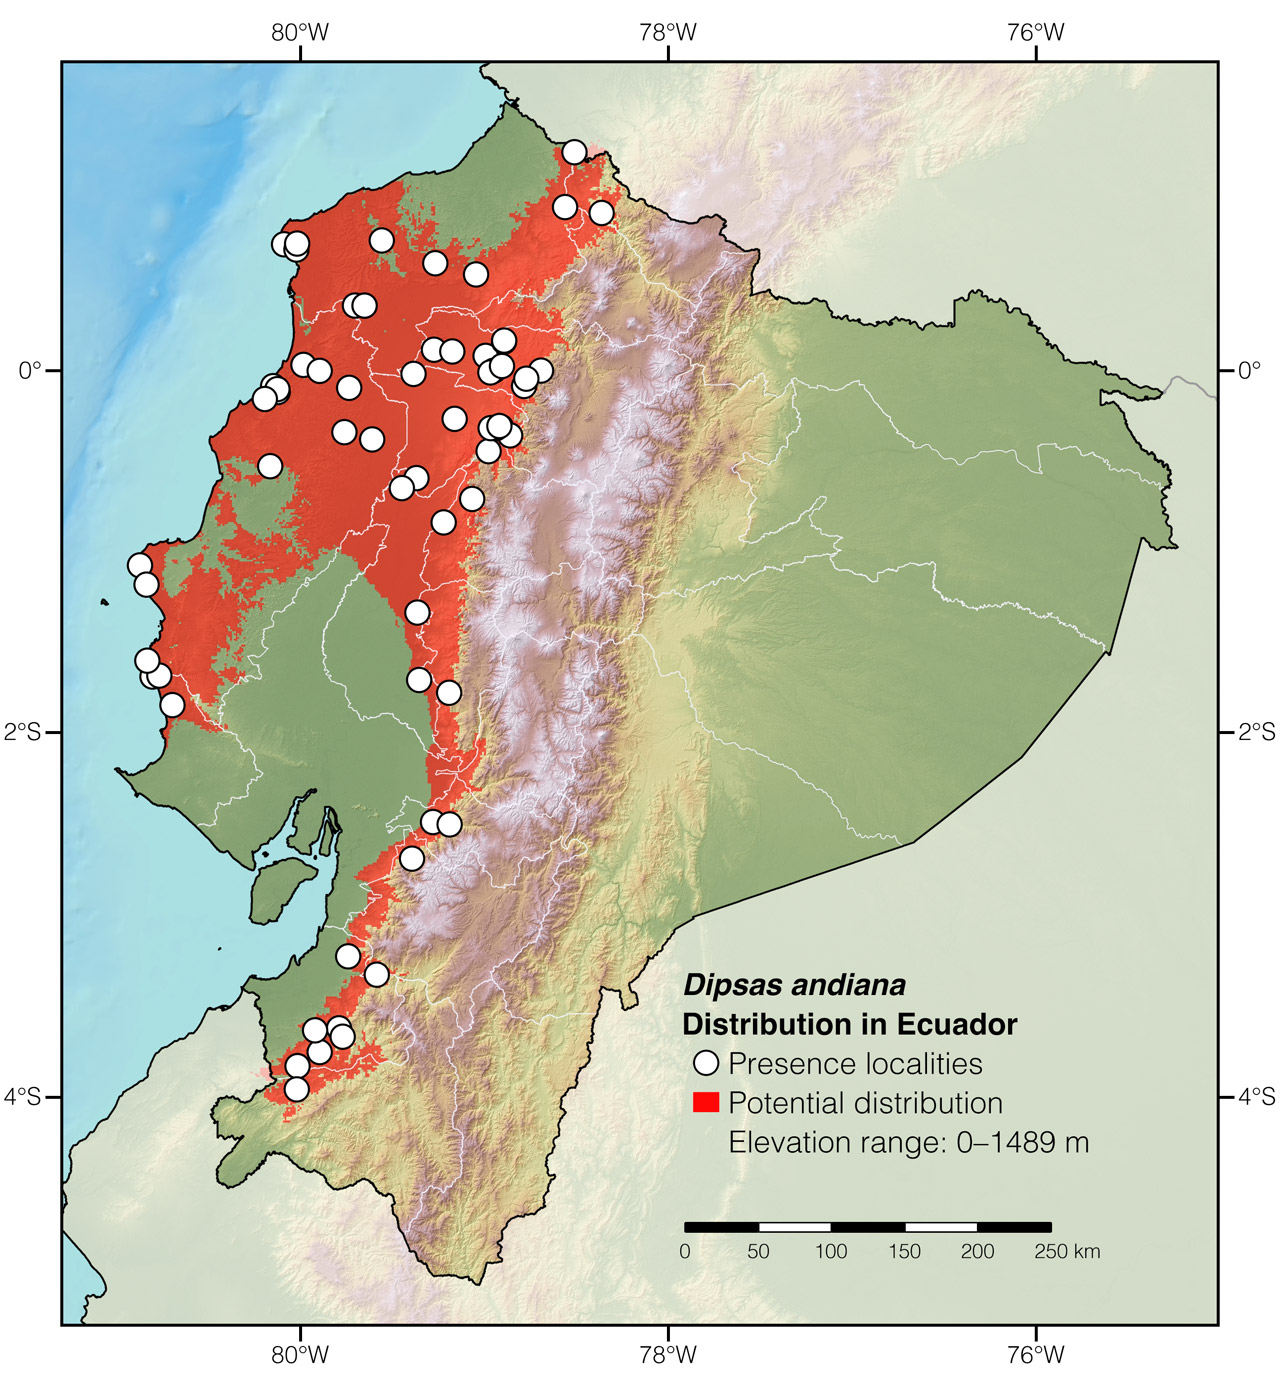 Distribution of Dipsas andiana in Ecuador